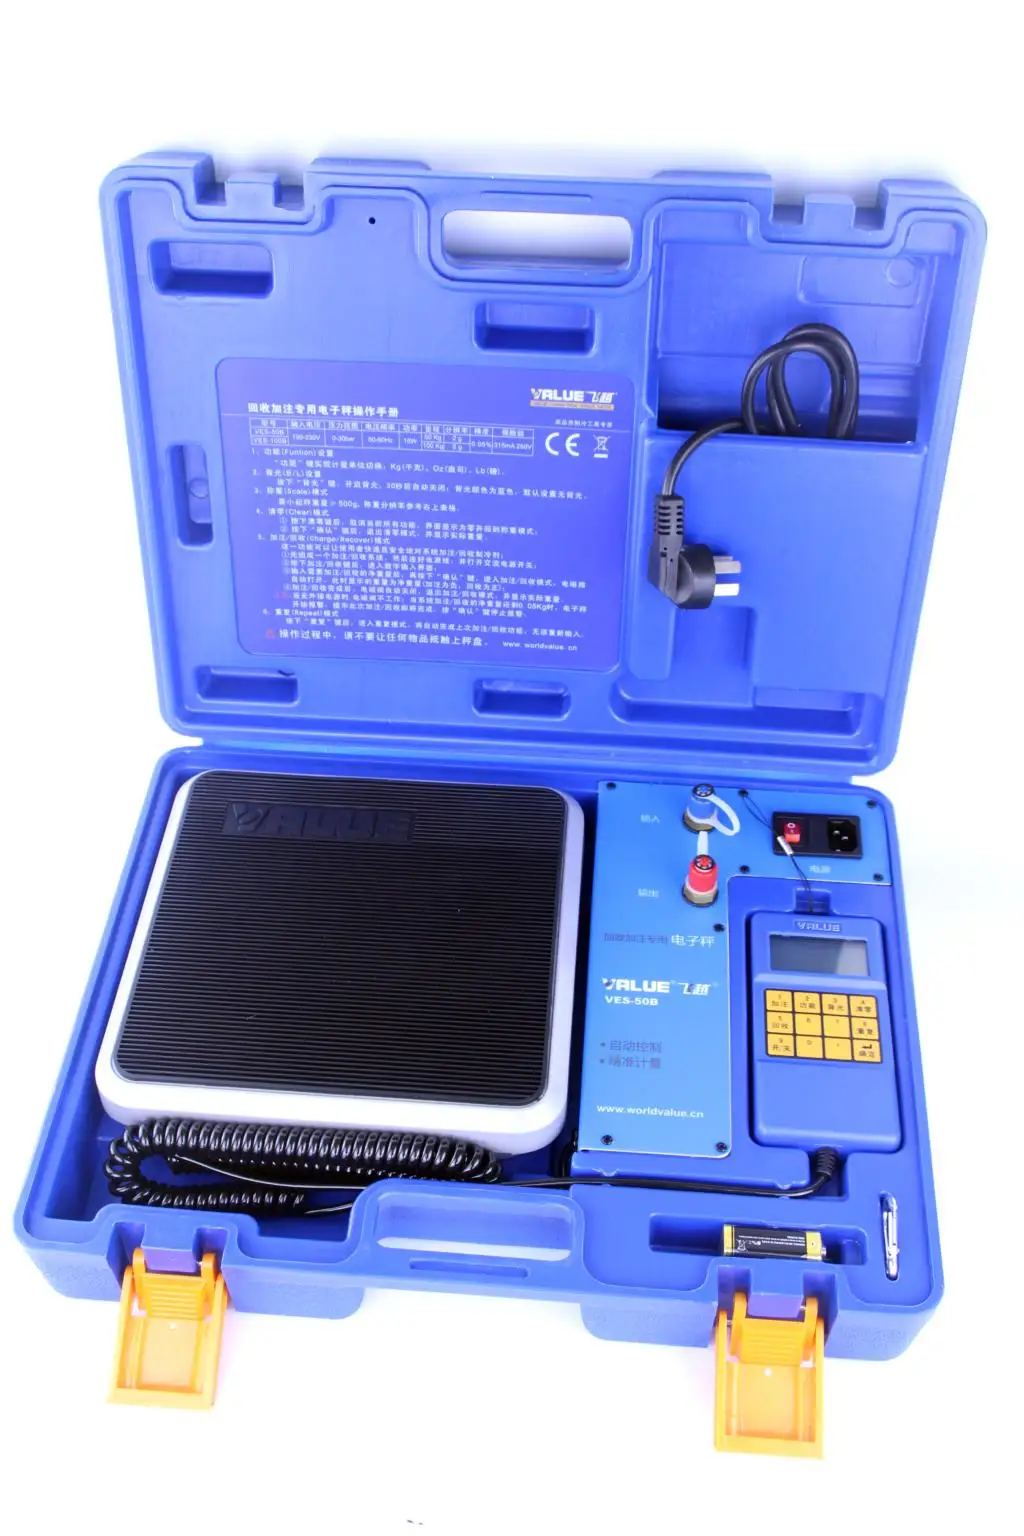 Количественный хладагент VES-50B жидкий хладагент, указанный количественный электронный фторид, электронные весы 0